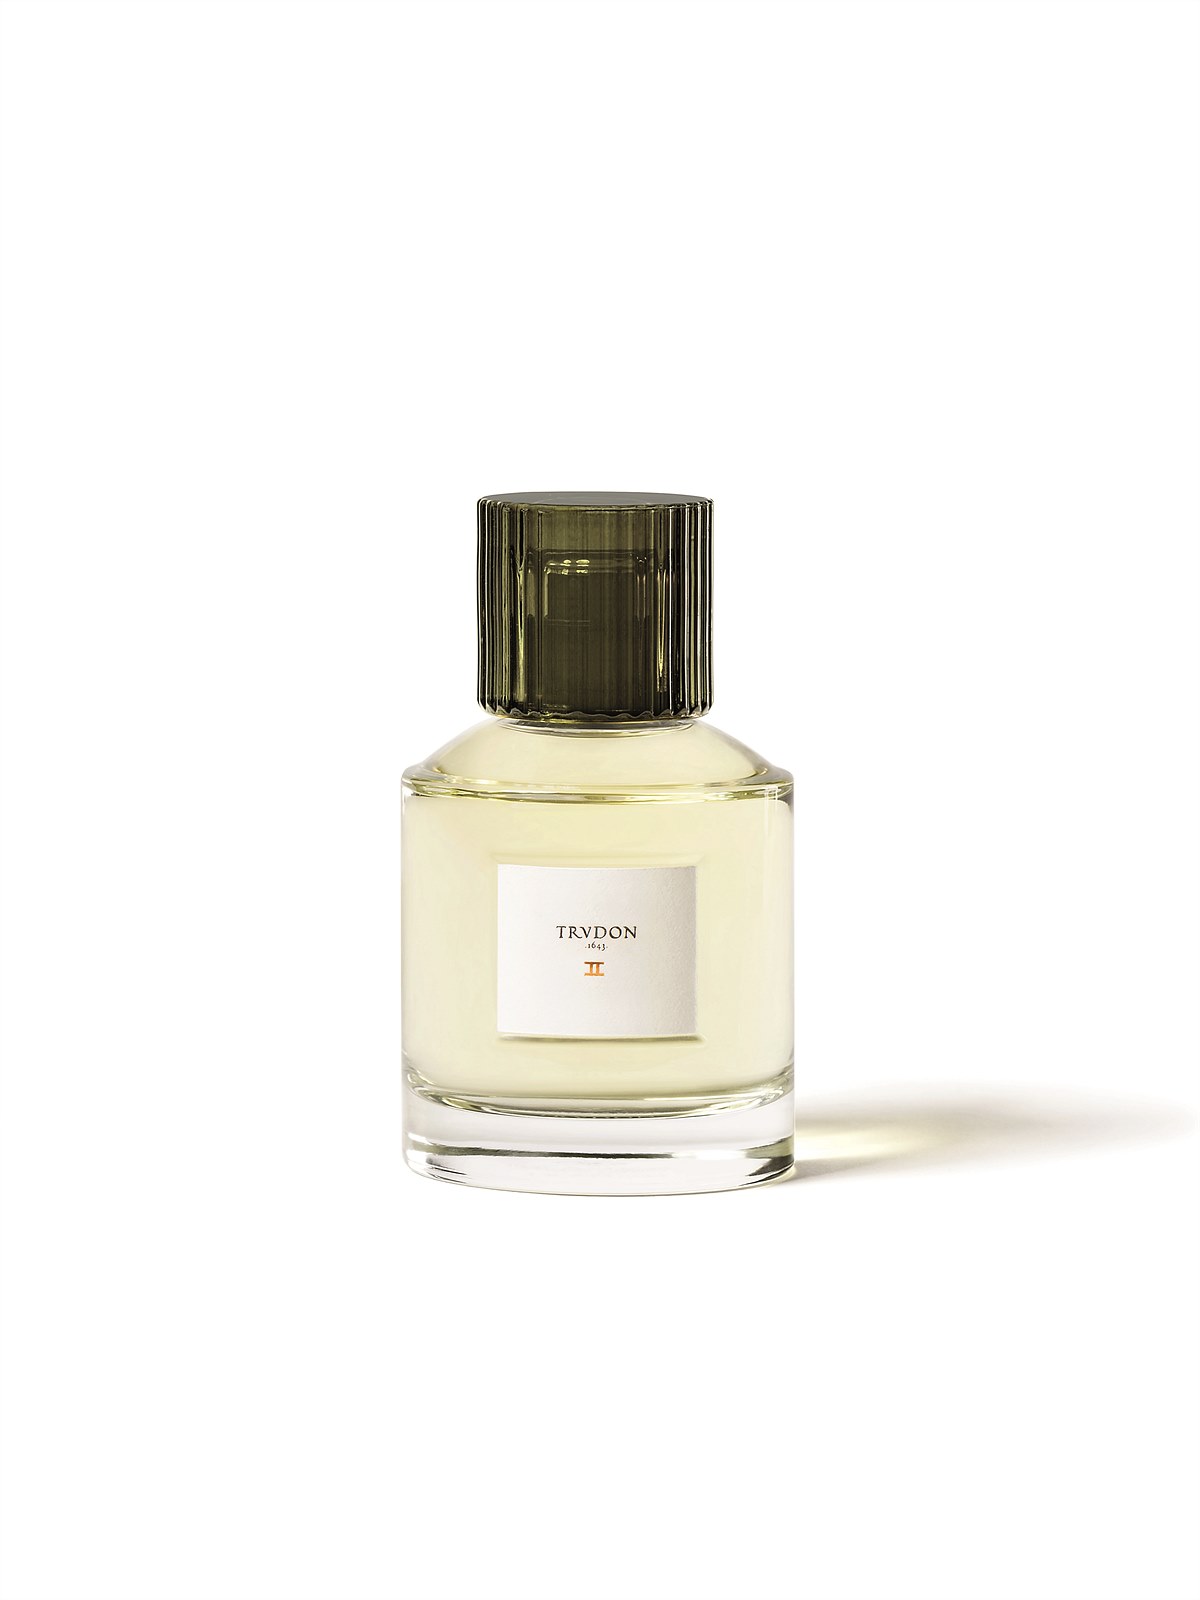 Trudon Parfums -Flacon II - 300dpi